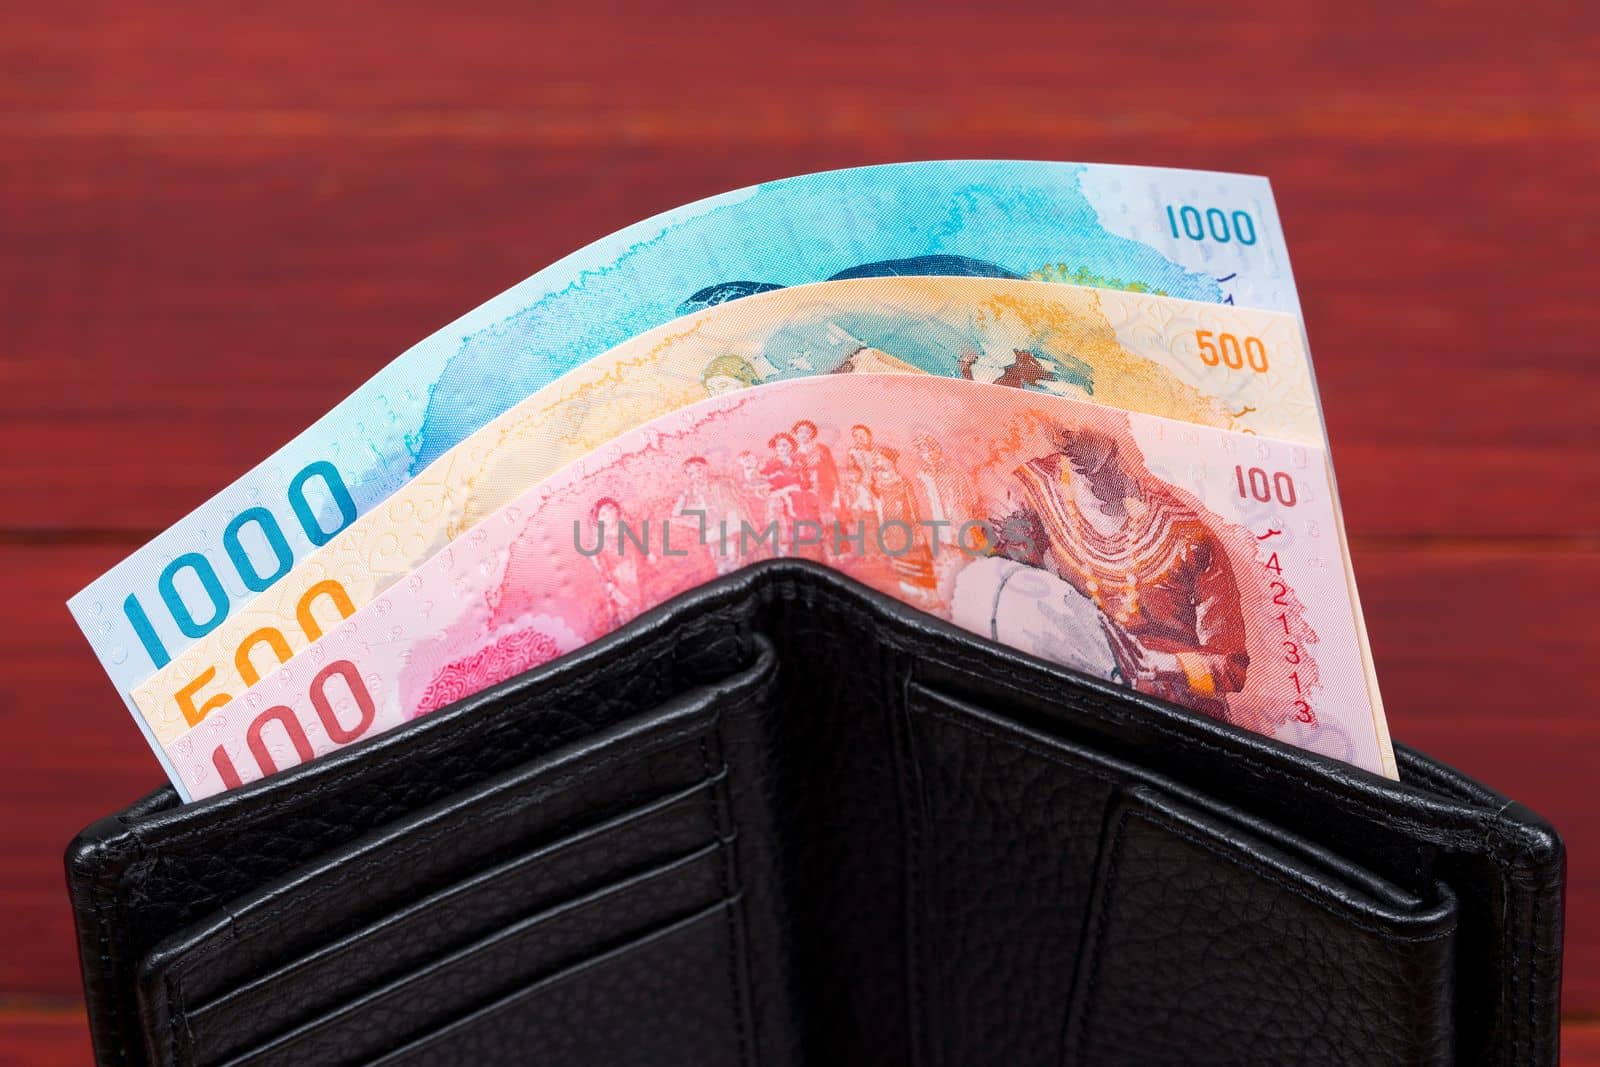 Maldivian money - rufiyaa in the black wallet